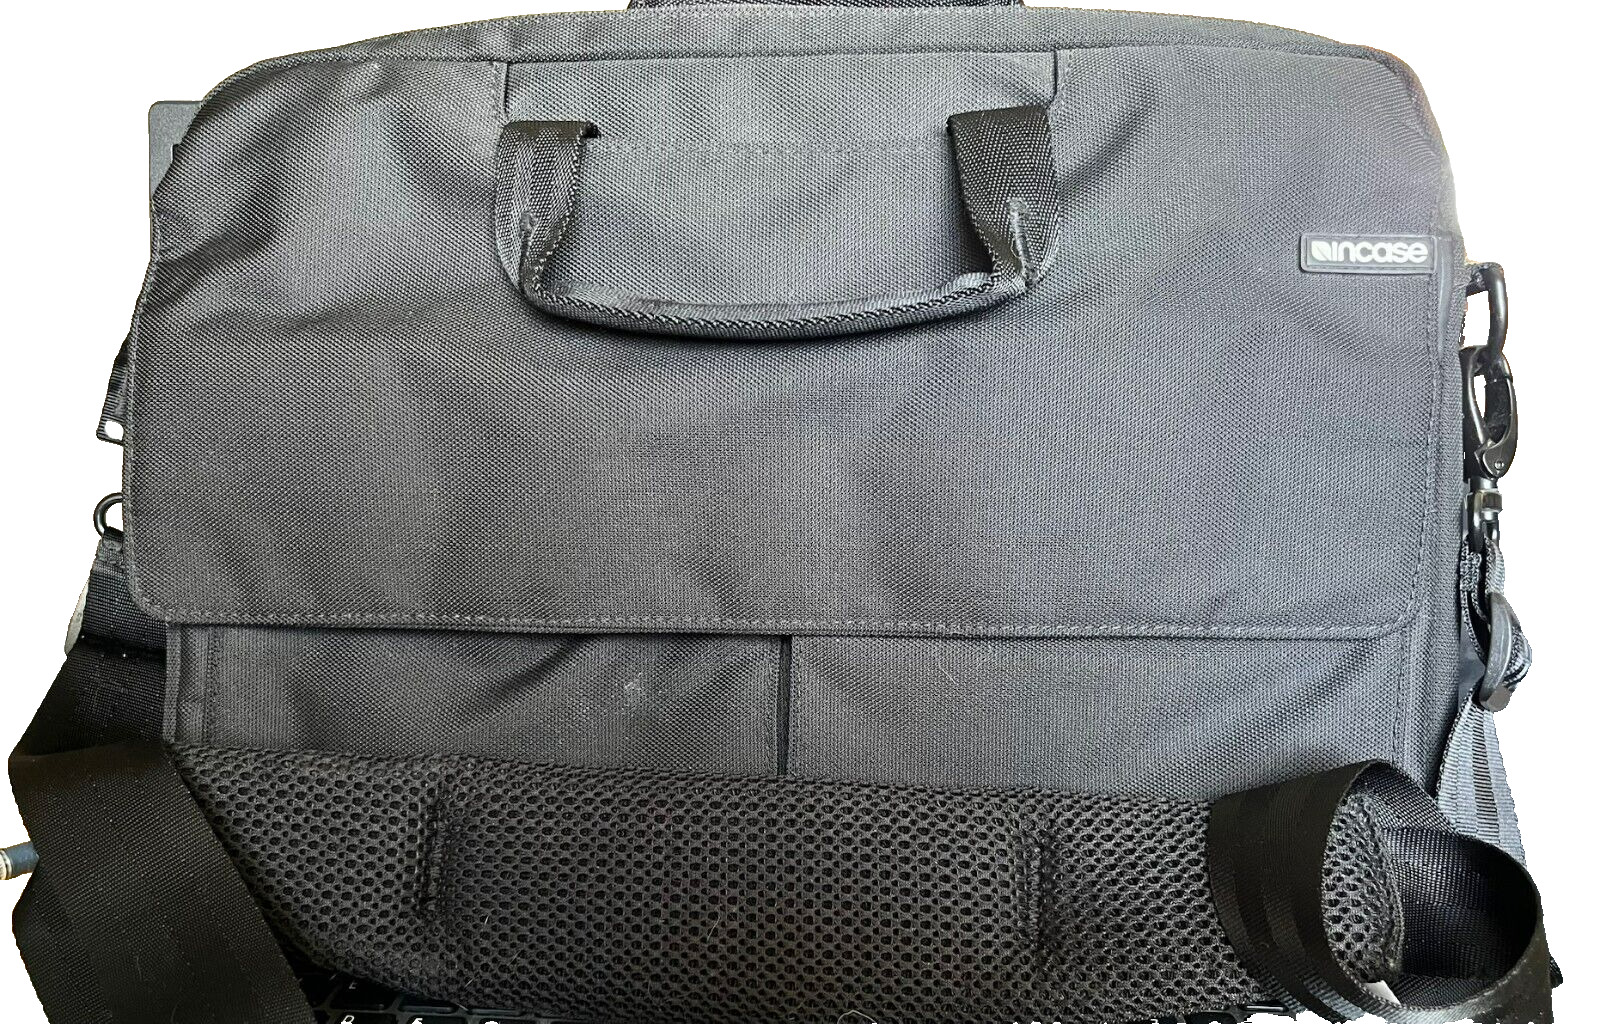 Incase Notebook Laptop Computer Bag Shoulder Carrying Messenger 14” x 10” x 2”